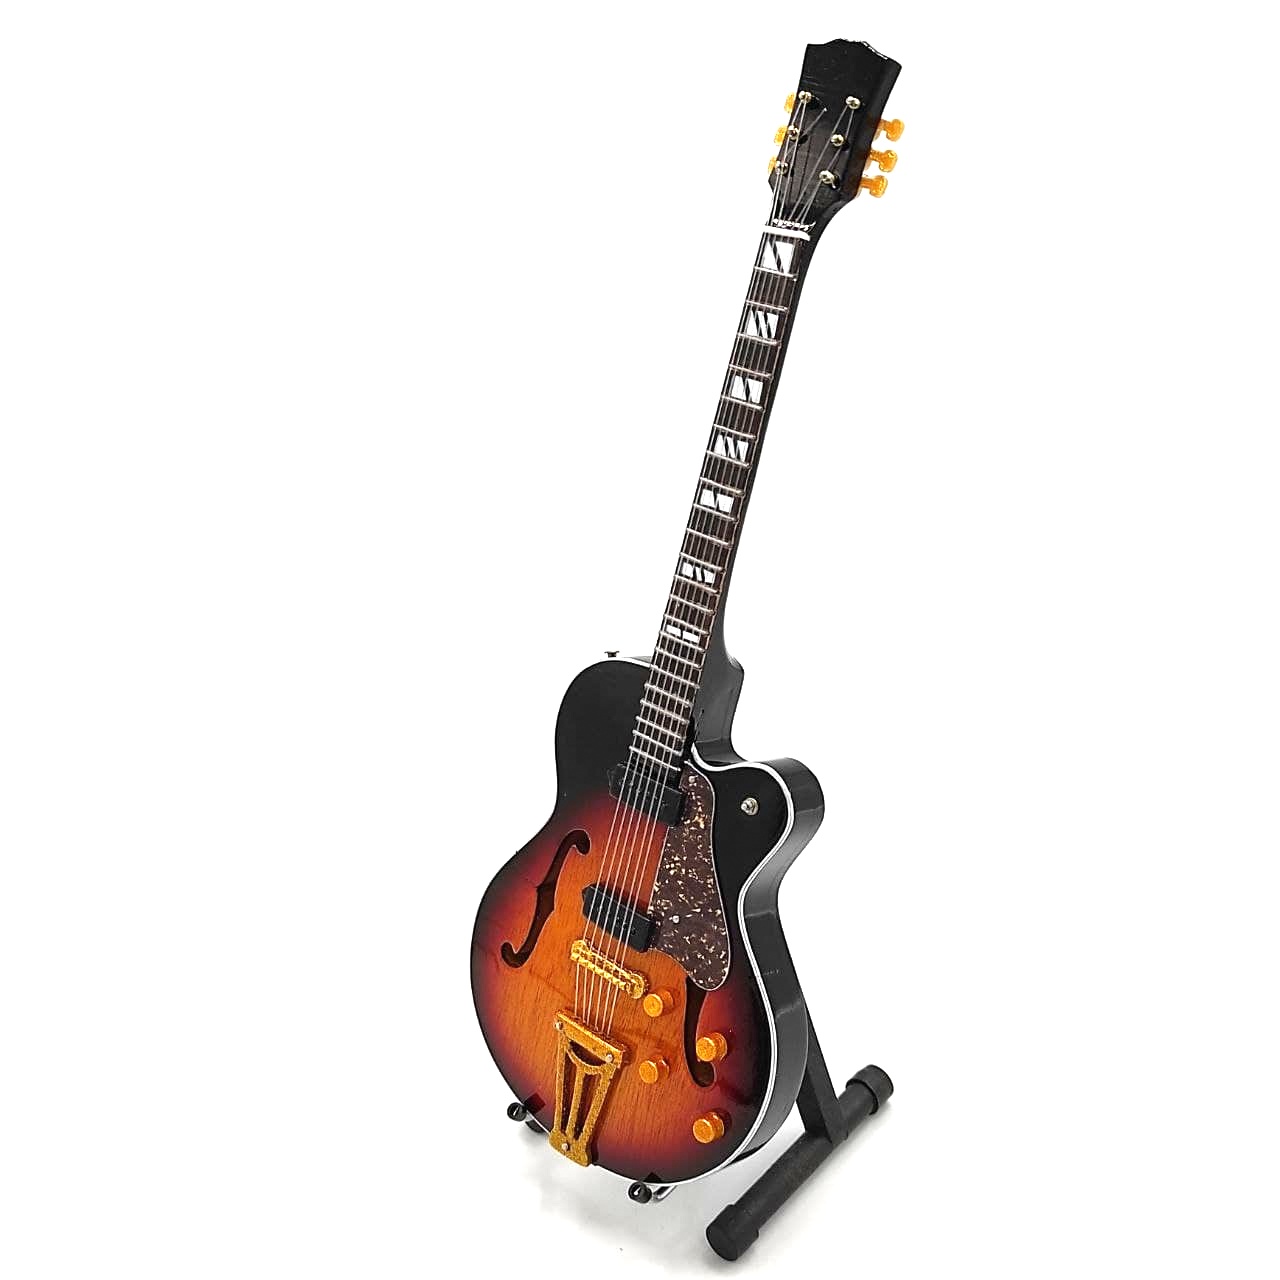 Mini-guitar - Elvis Presley, MGT-0857, scale 1: 4